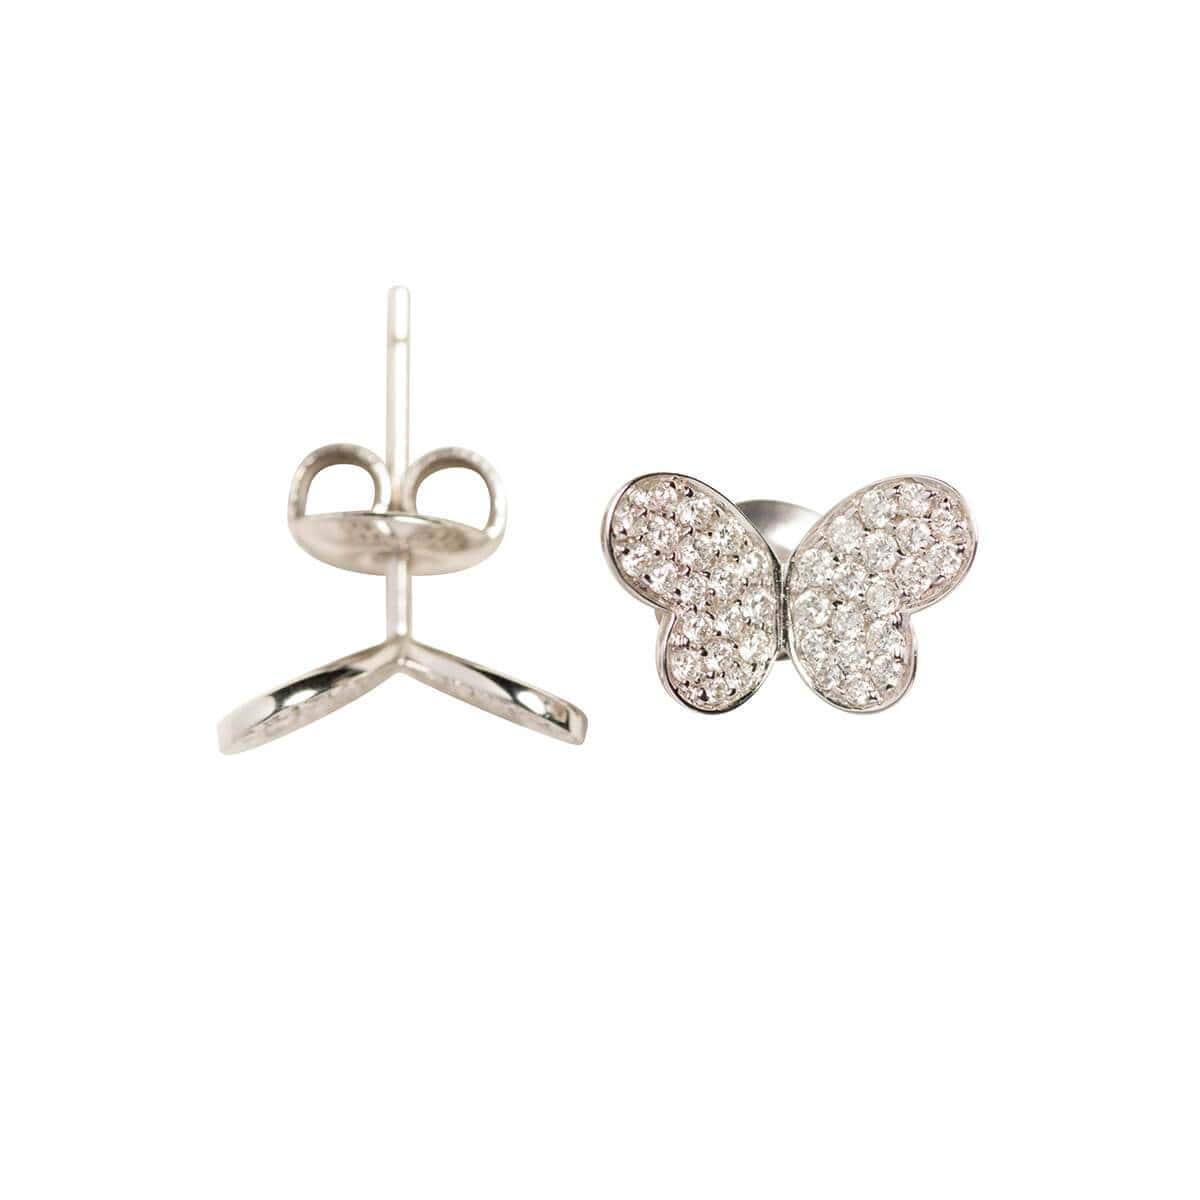 butterfly-shaped jewelry